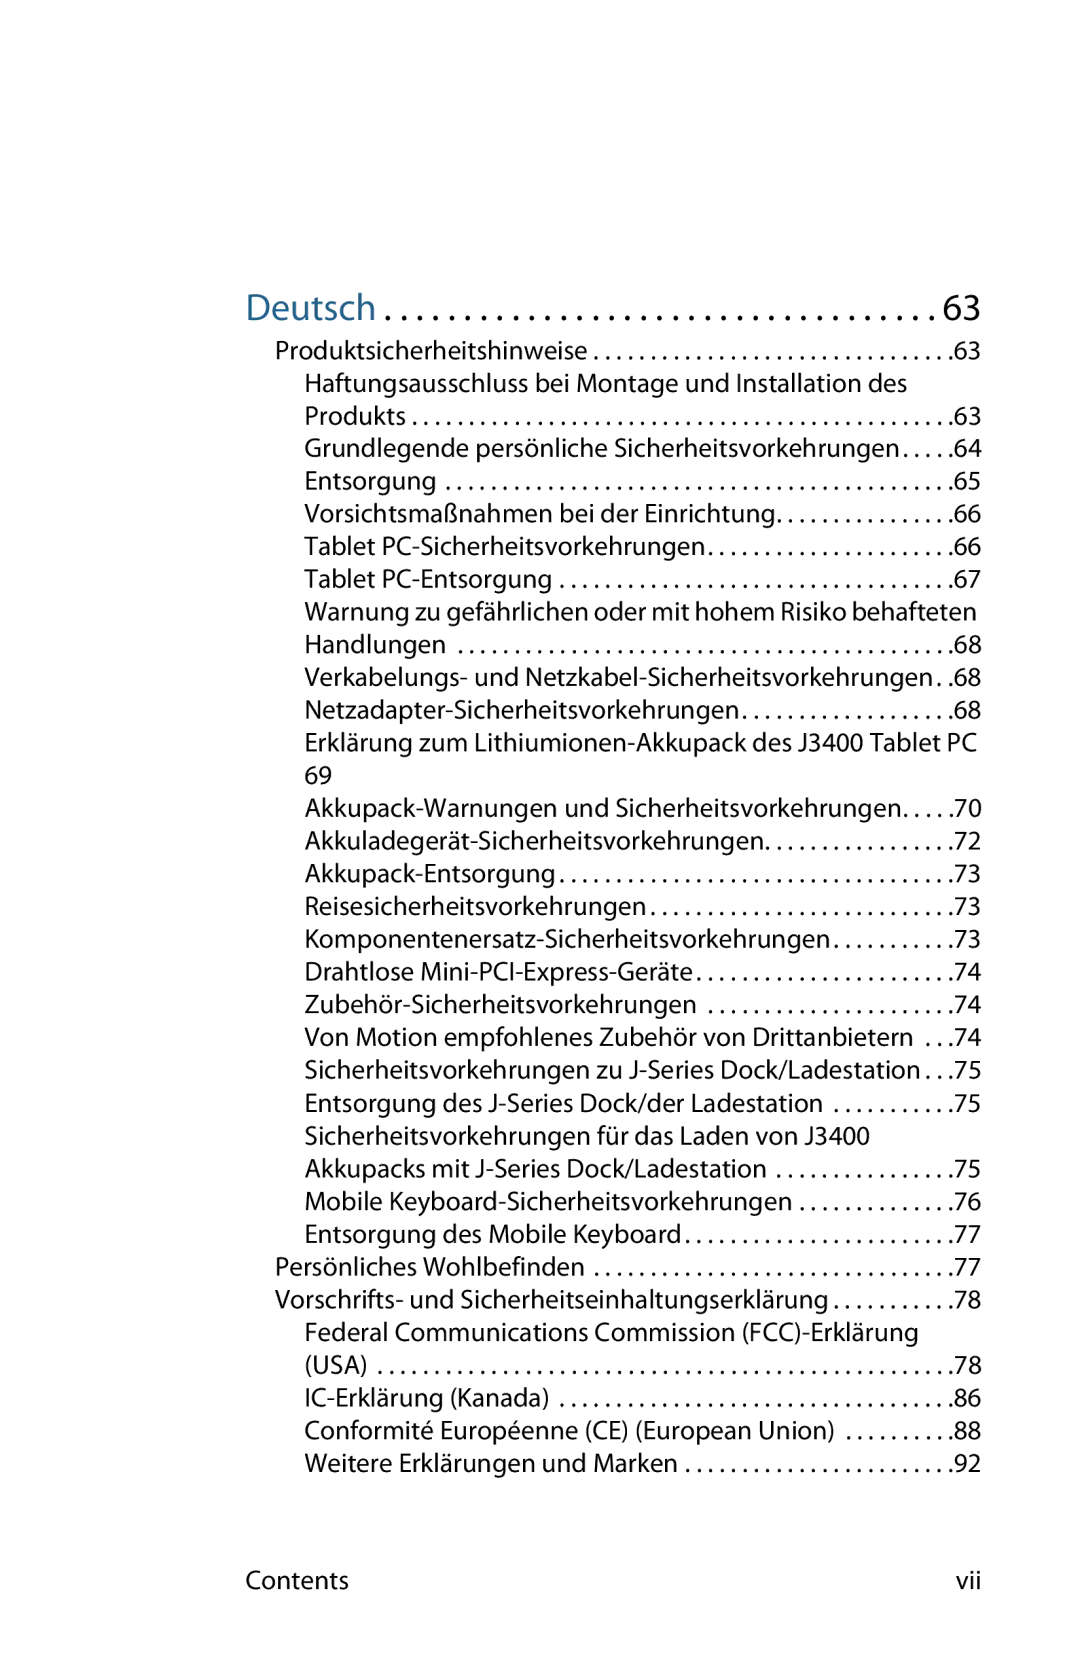 Motion Computing MDC001, MKB005, T008 manual Deutsch, Contents Vii 